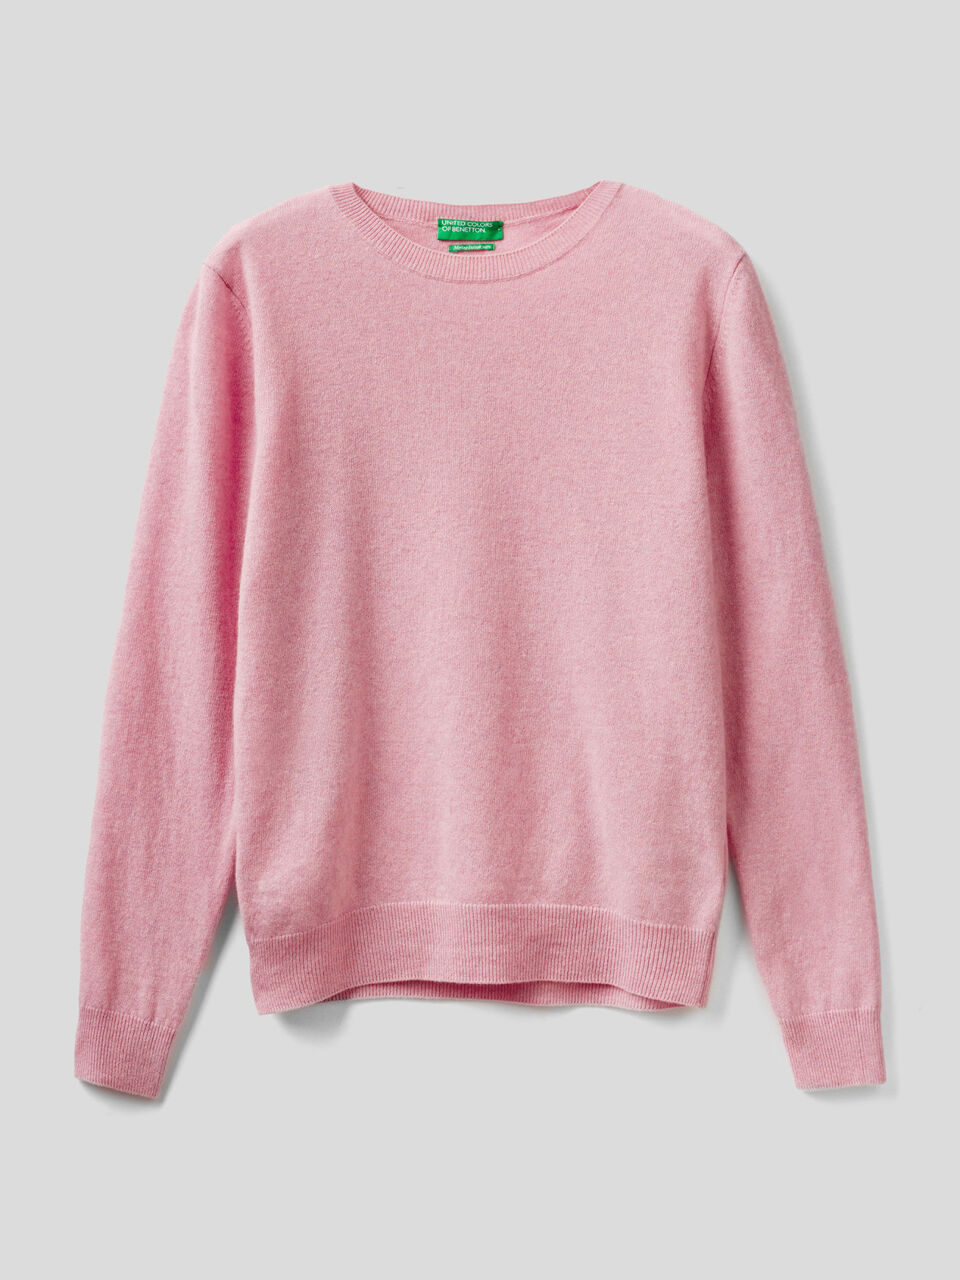 Pink crew neck sweater in pure virgin wool